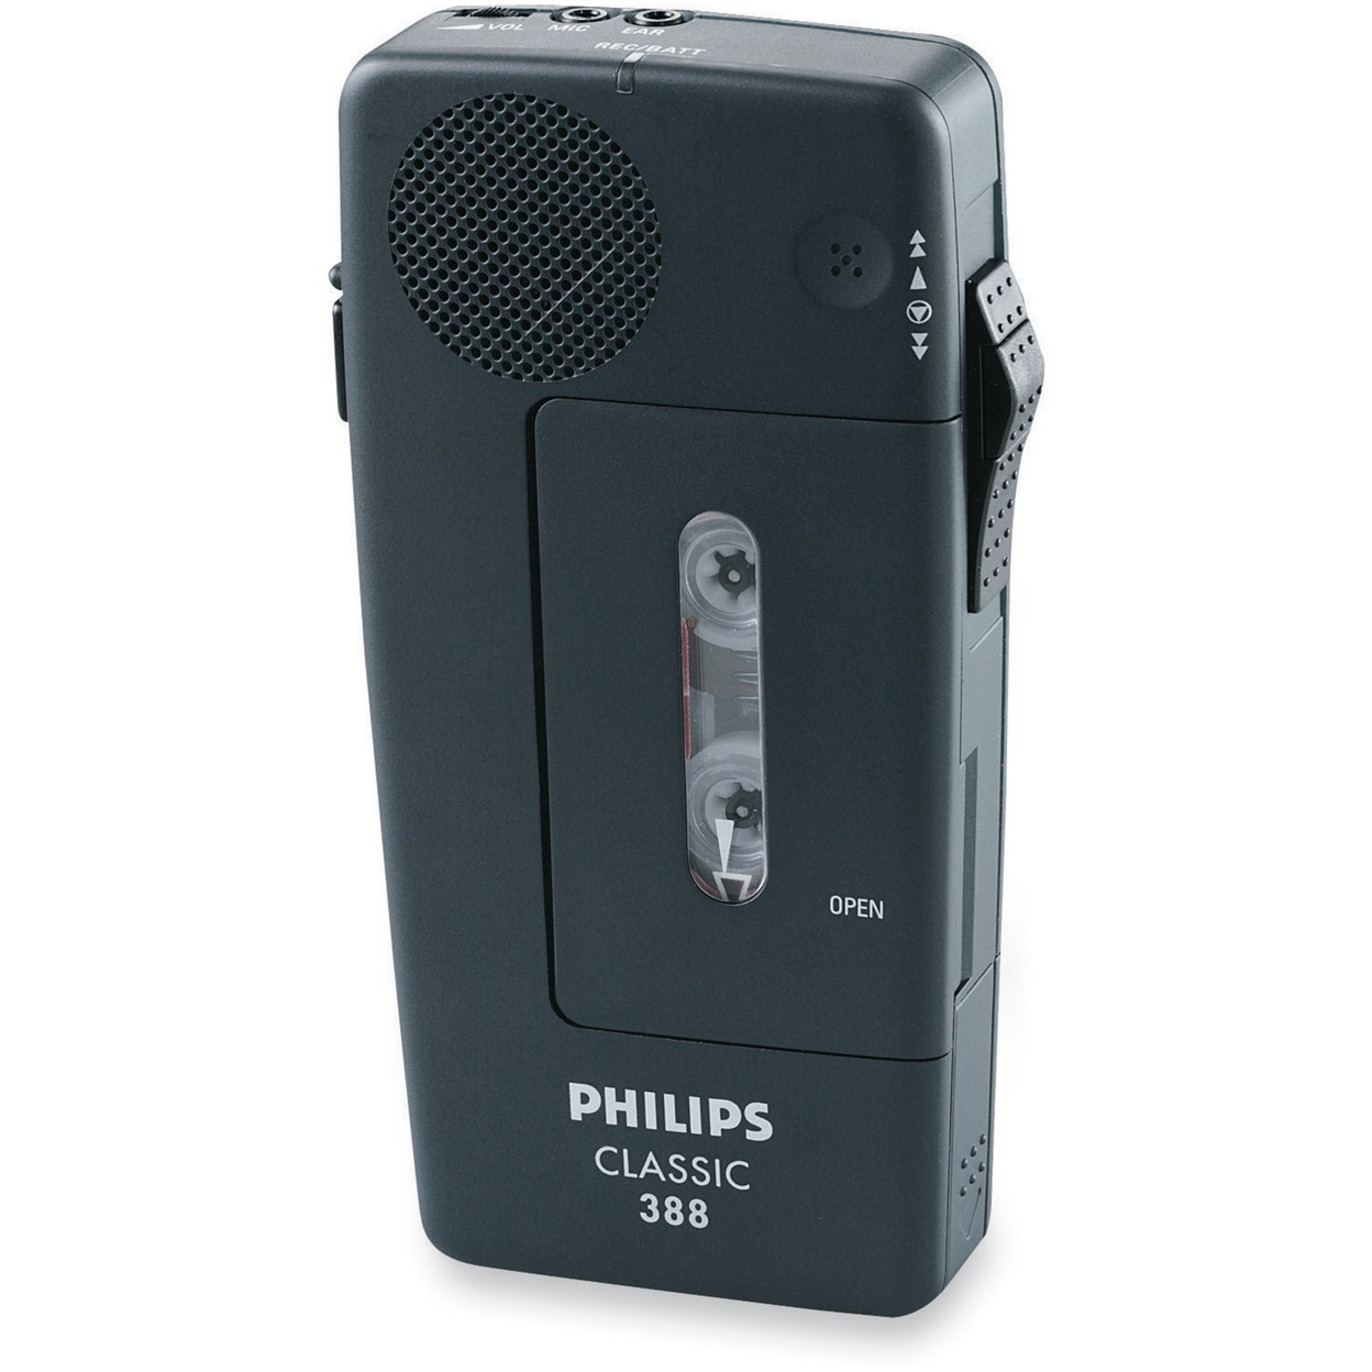 Philips Speech Processing Pocket Memo 388 Slide Switch Mini Cassette Dictation Recorder - image 1 of 2